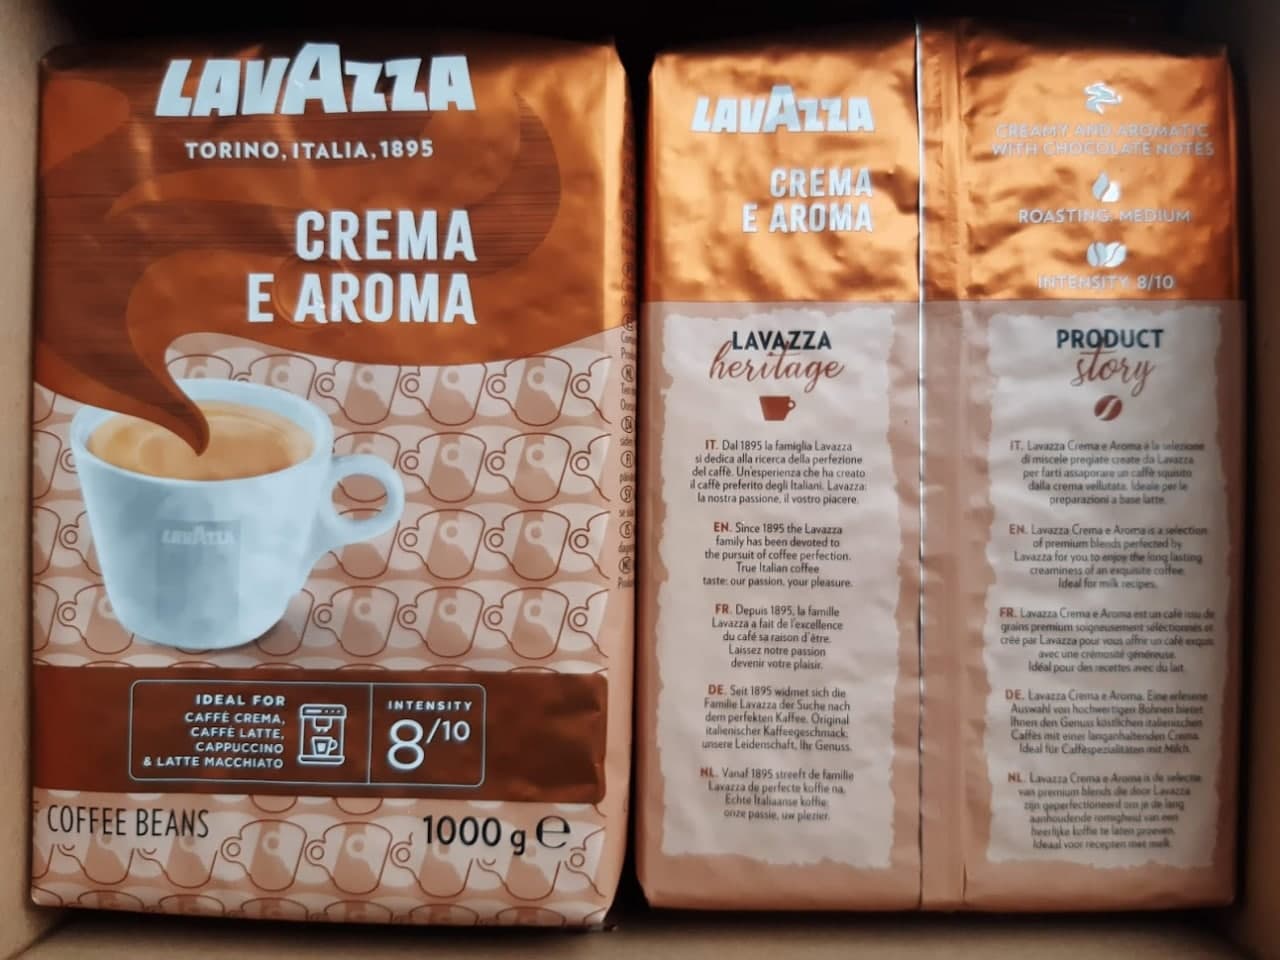 Kohvioad "LAVAZZA" Crema e Aroma